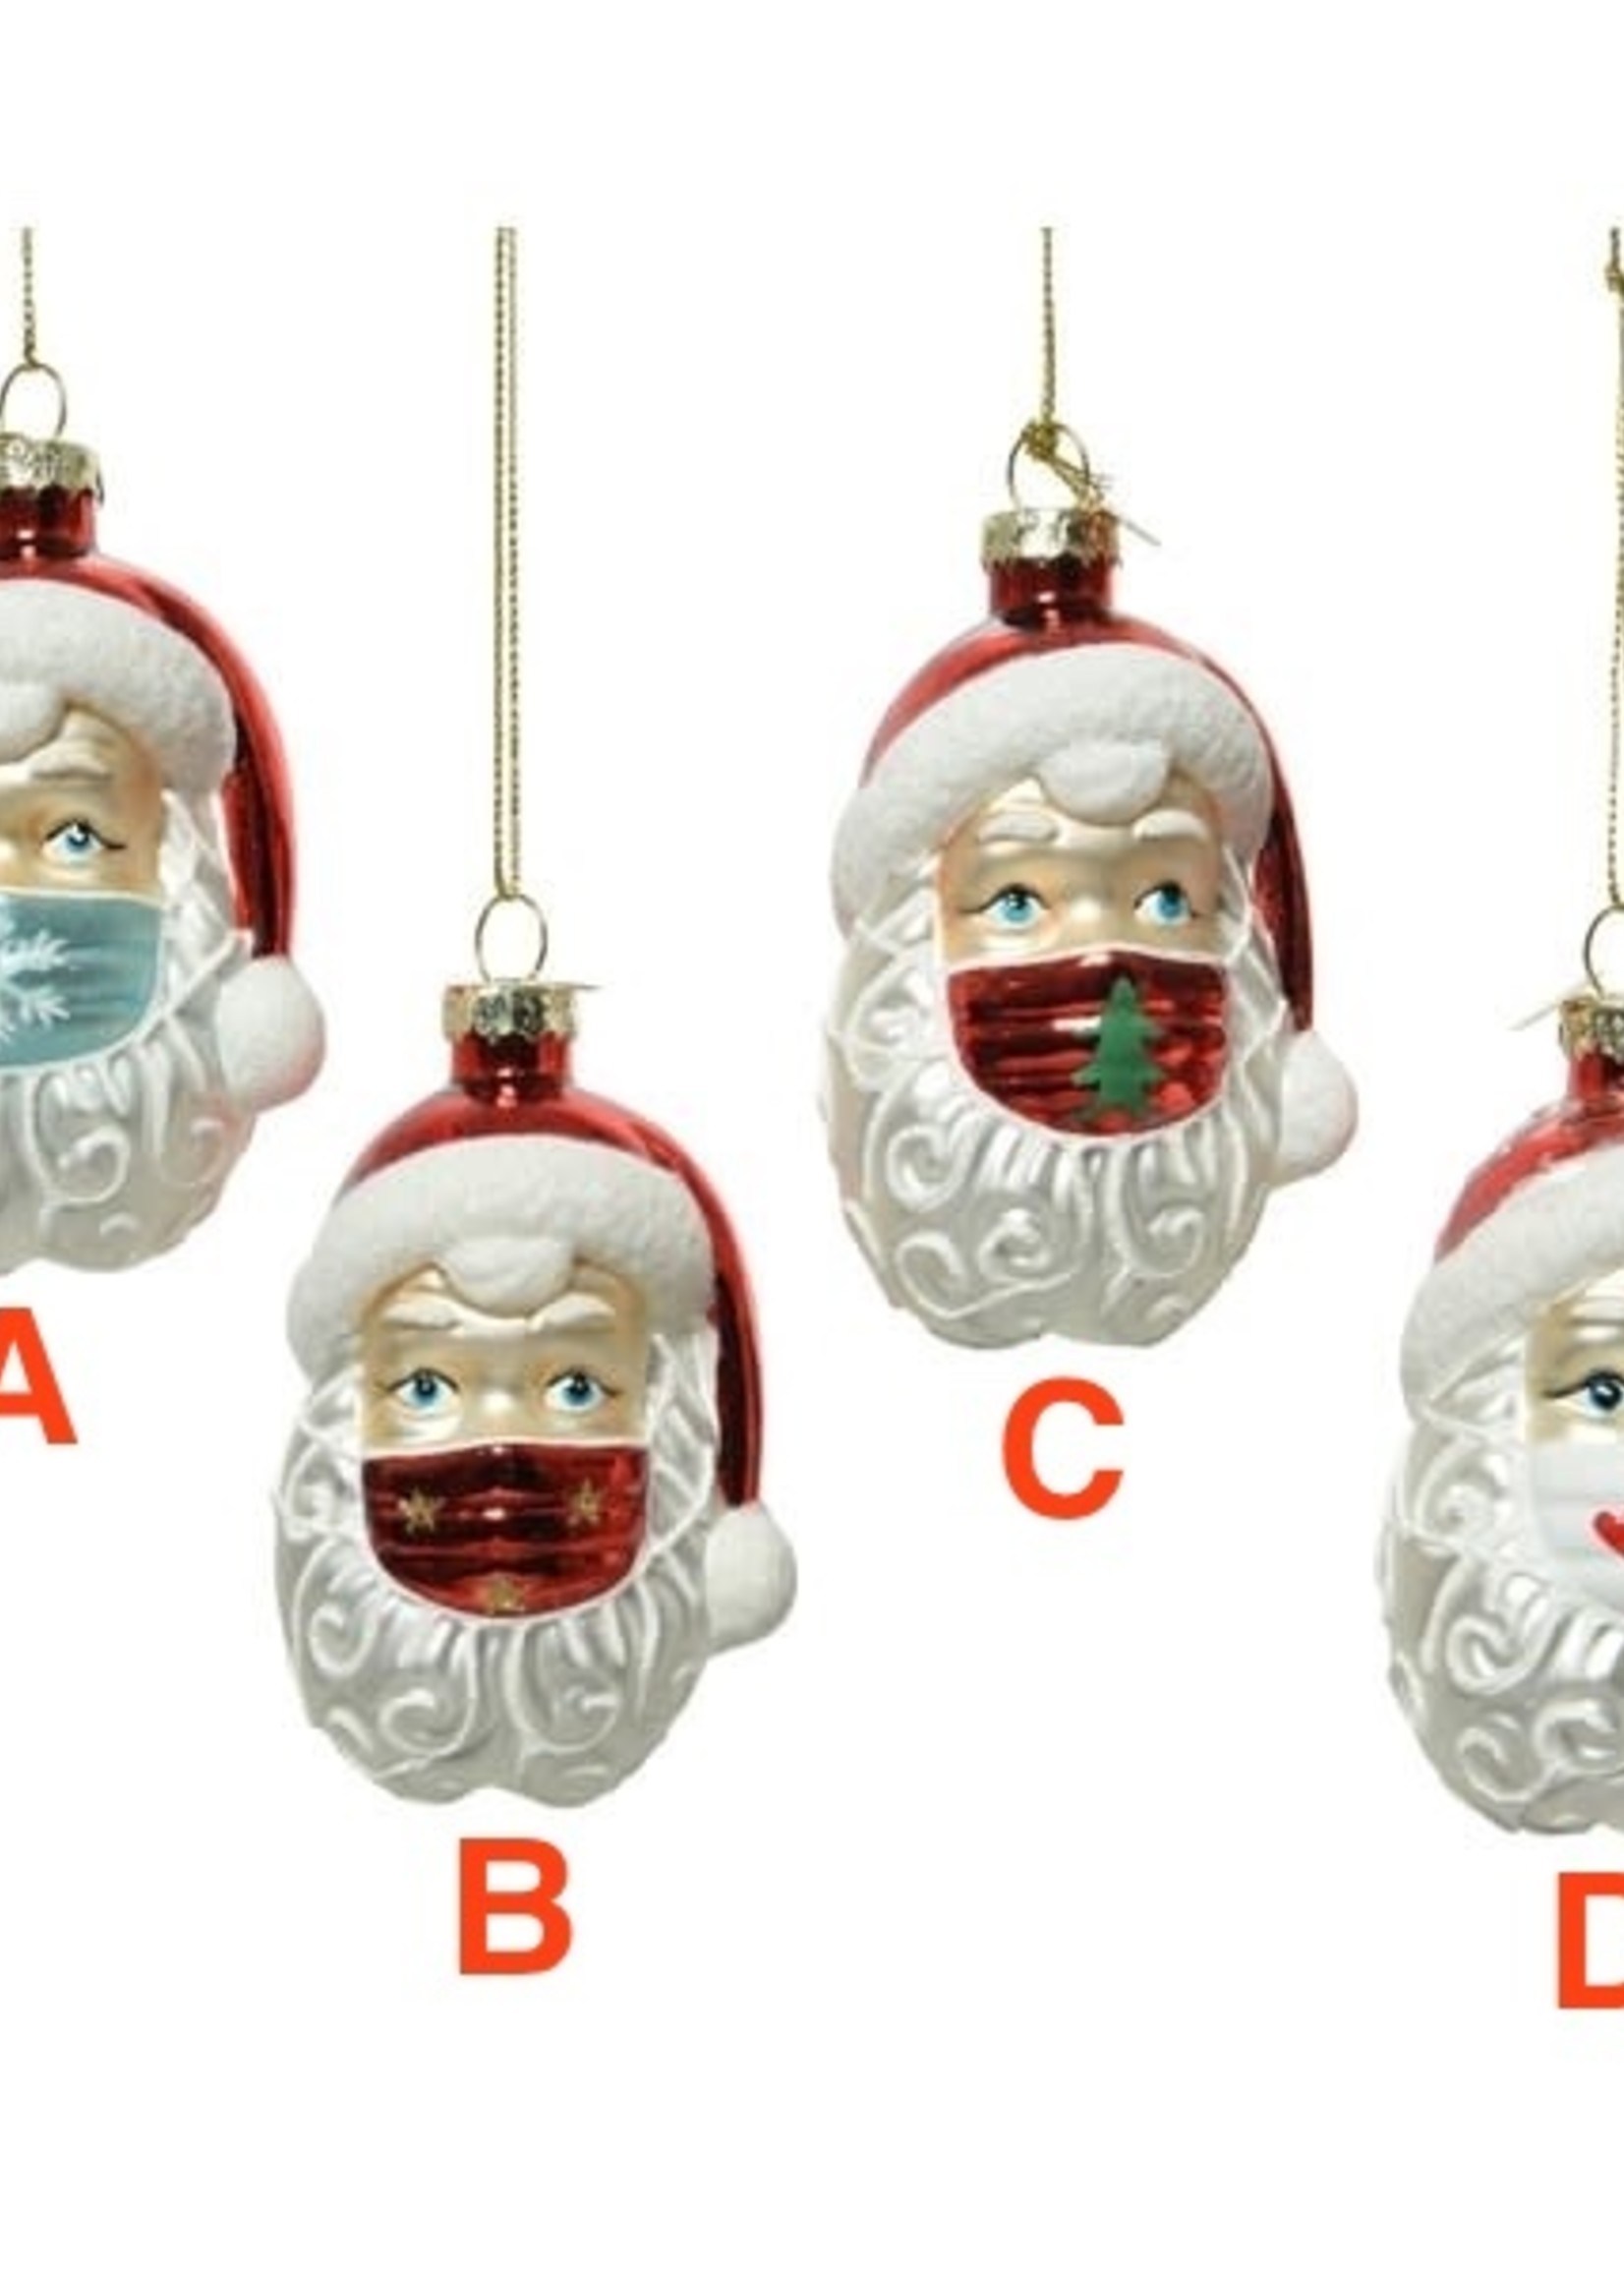 Decoris Bauble Santa Wearing Mask 4 Assorted designs price each